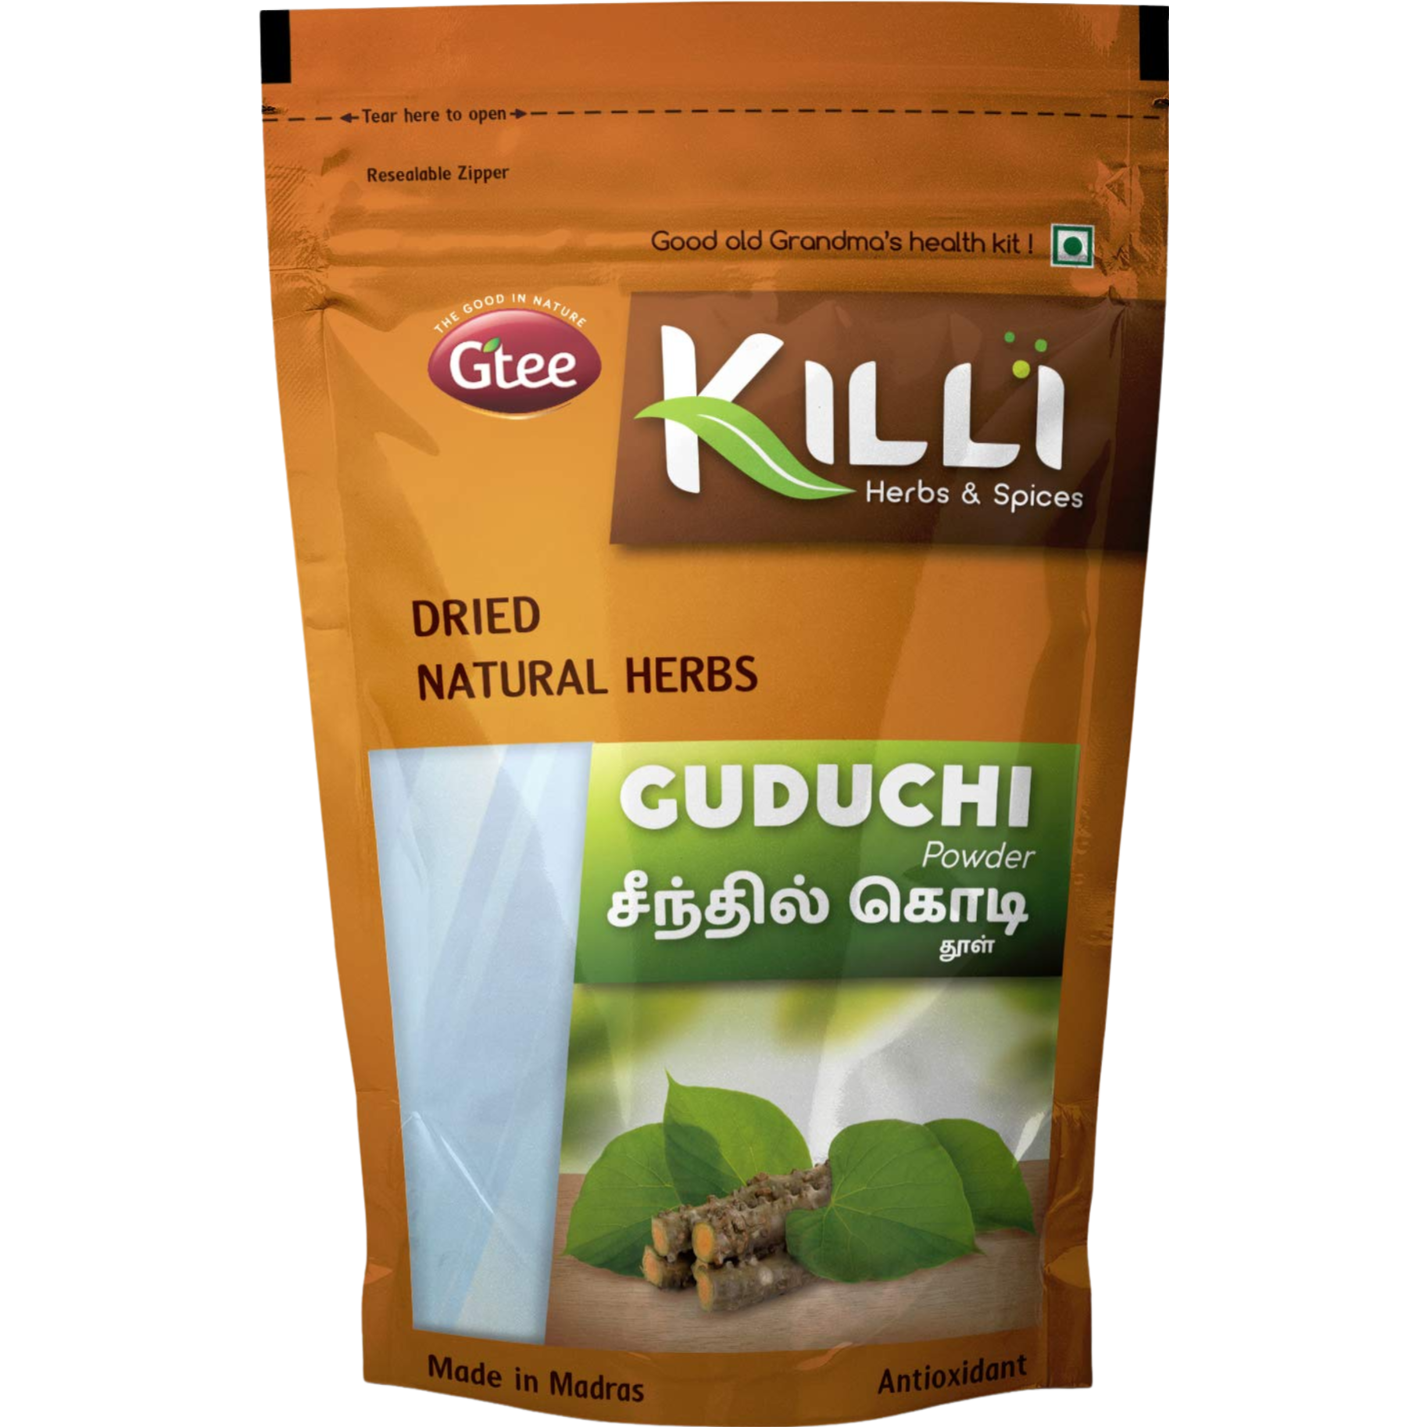 Case of 1 - Gtee Killi Guduchi Dried Natural Herb - 100 Gm (3.5 Oz)